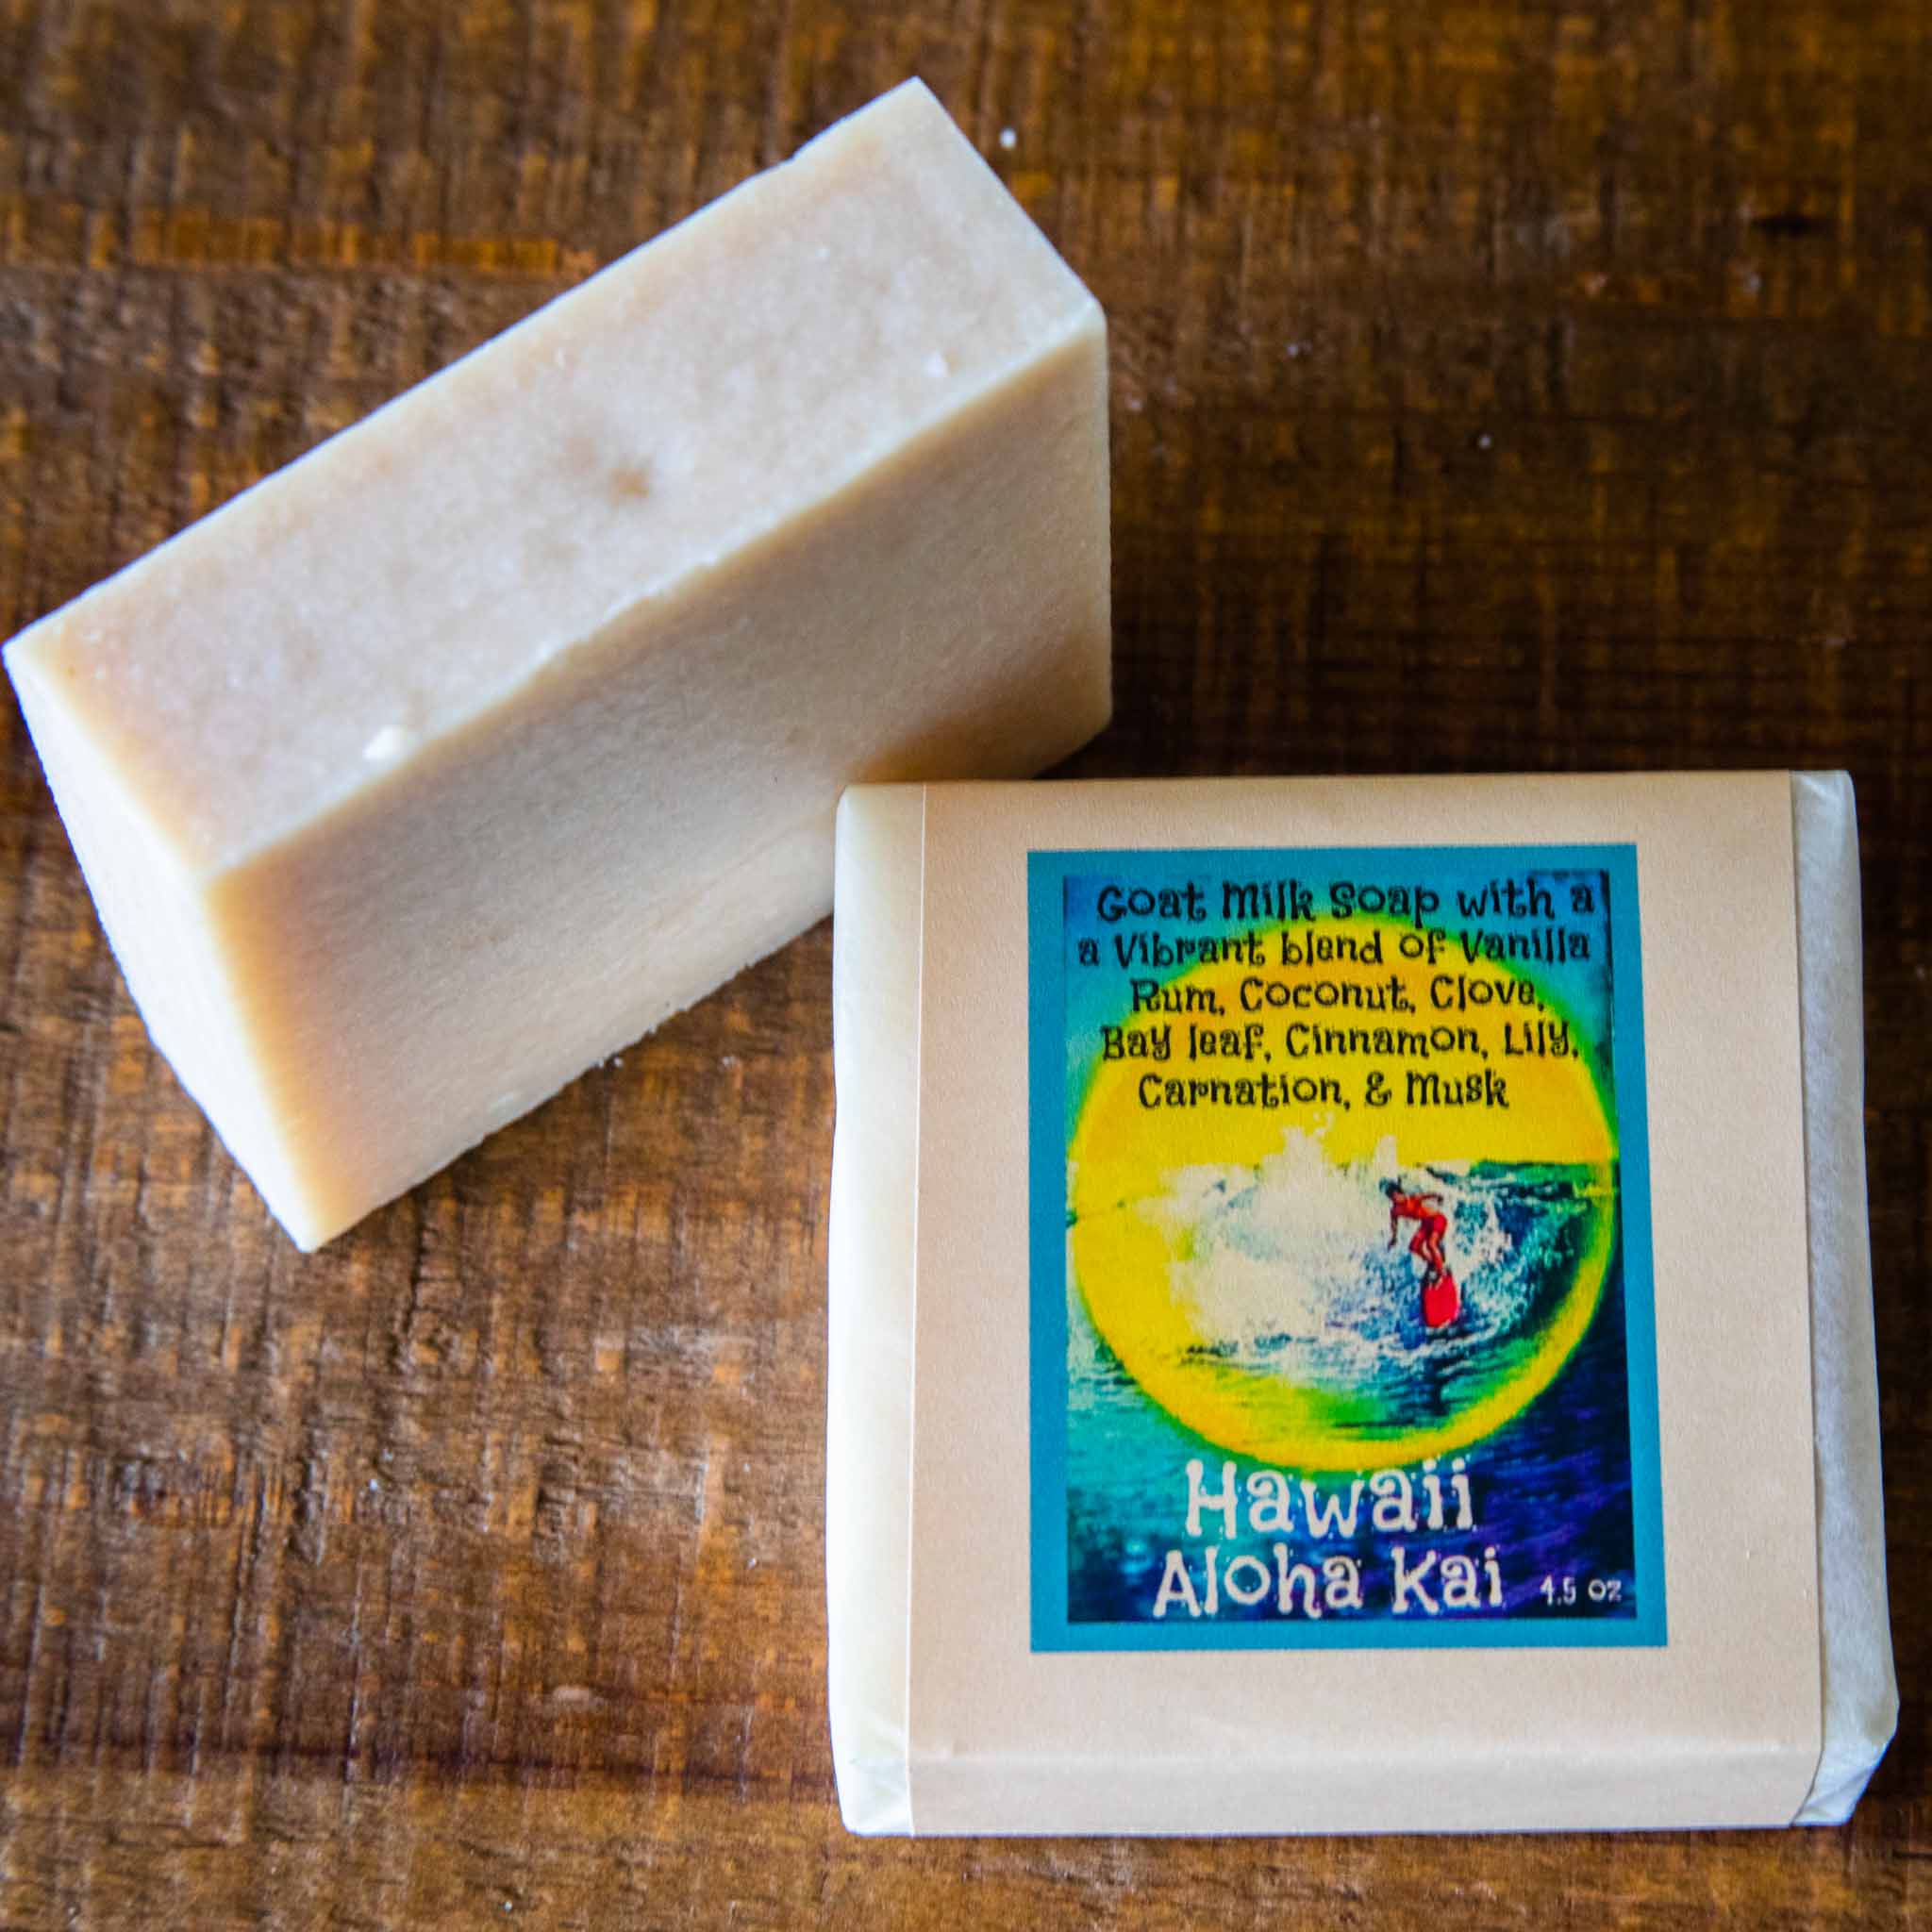 Hawaii Aloha Kai Goat Milk Soap